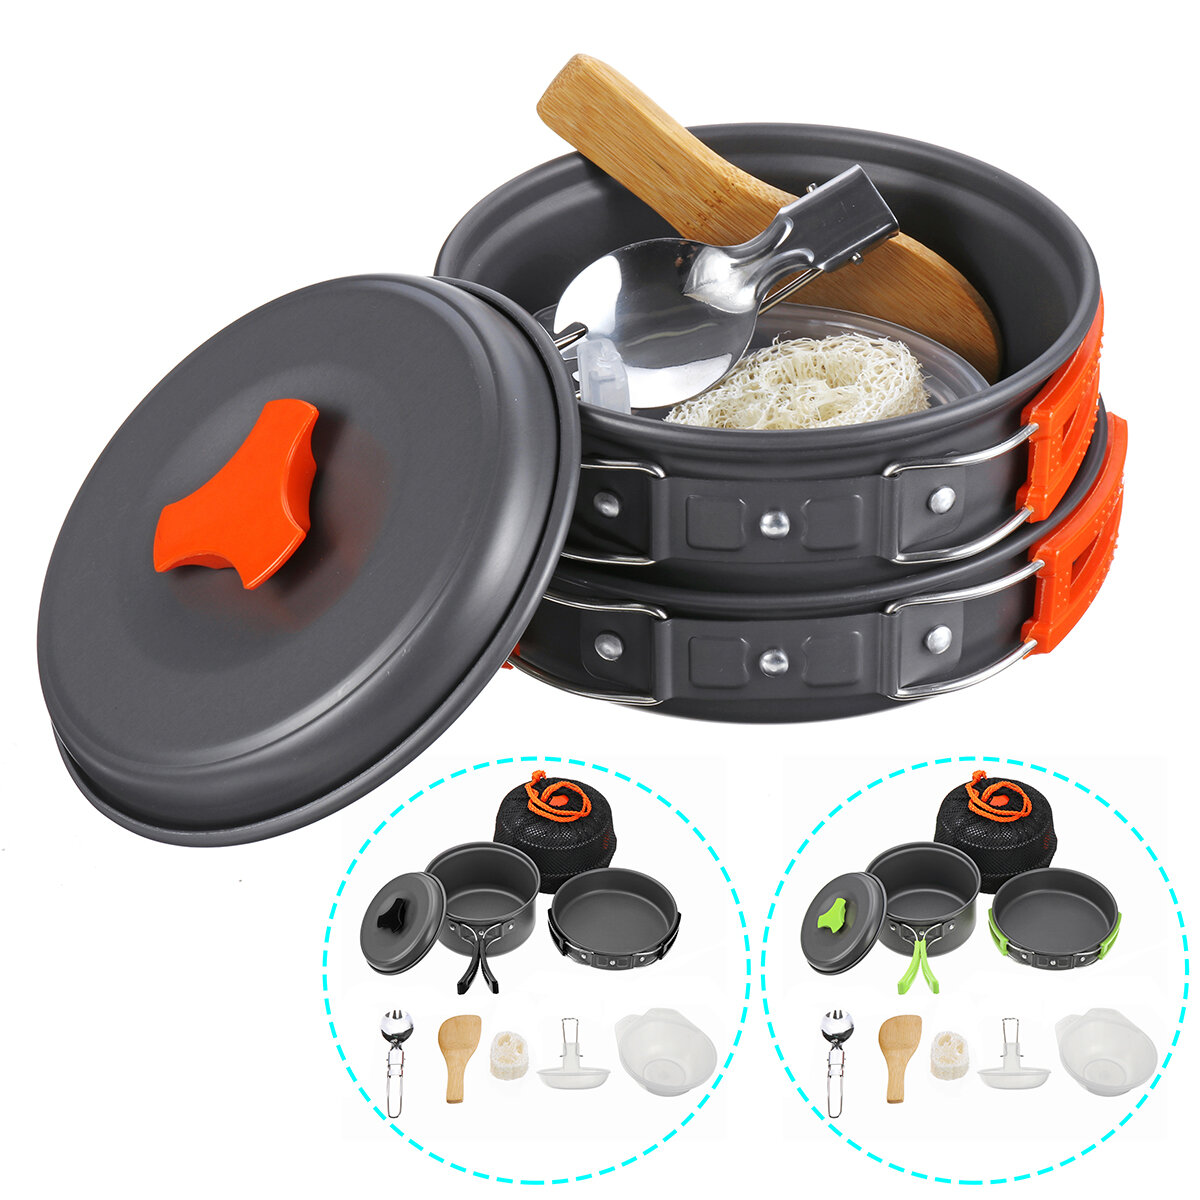 8 PCS Picnic BBQ Cooking Set 1-2 People Non-stick Pots Pans Bowls Outdoor Camping Cookware Kit